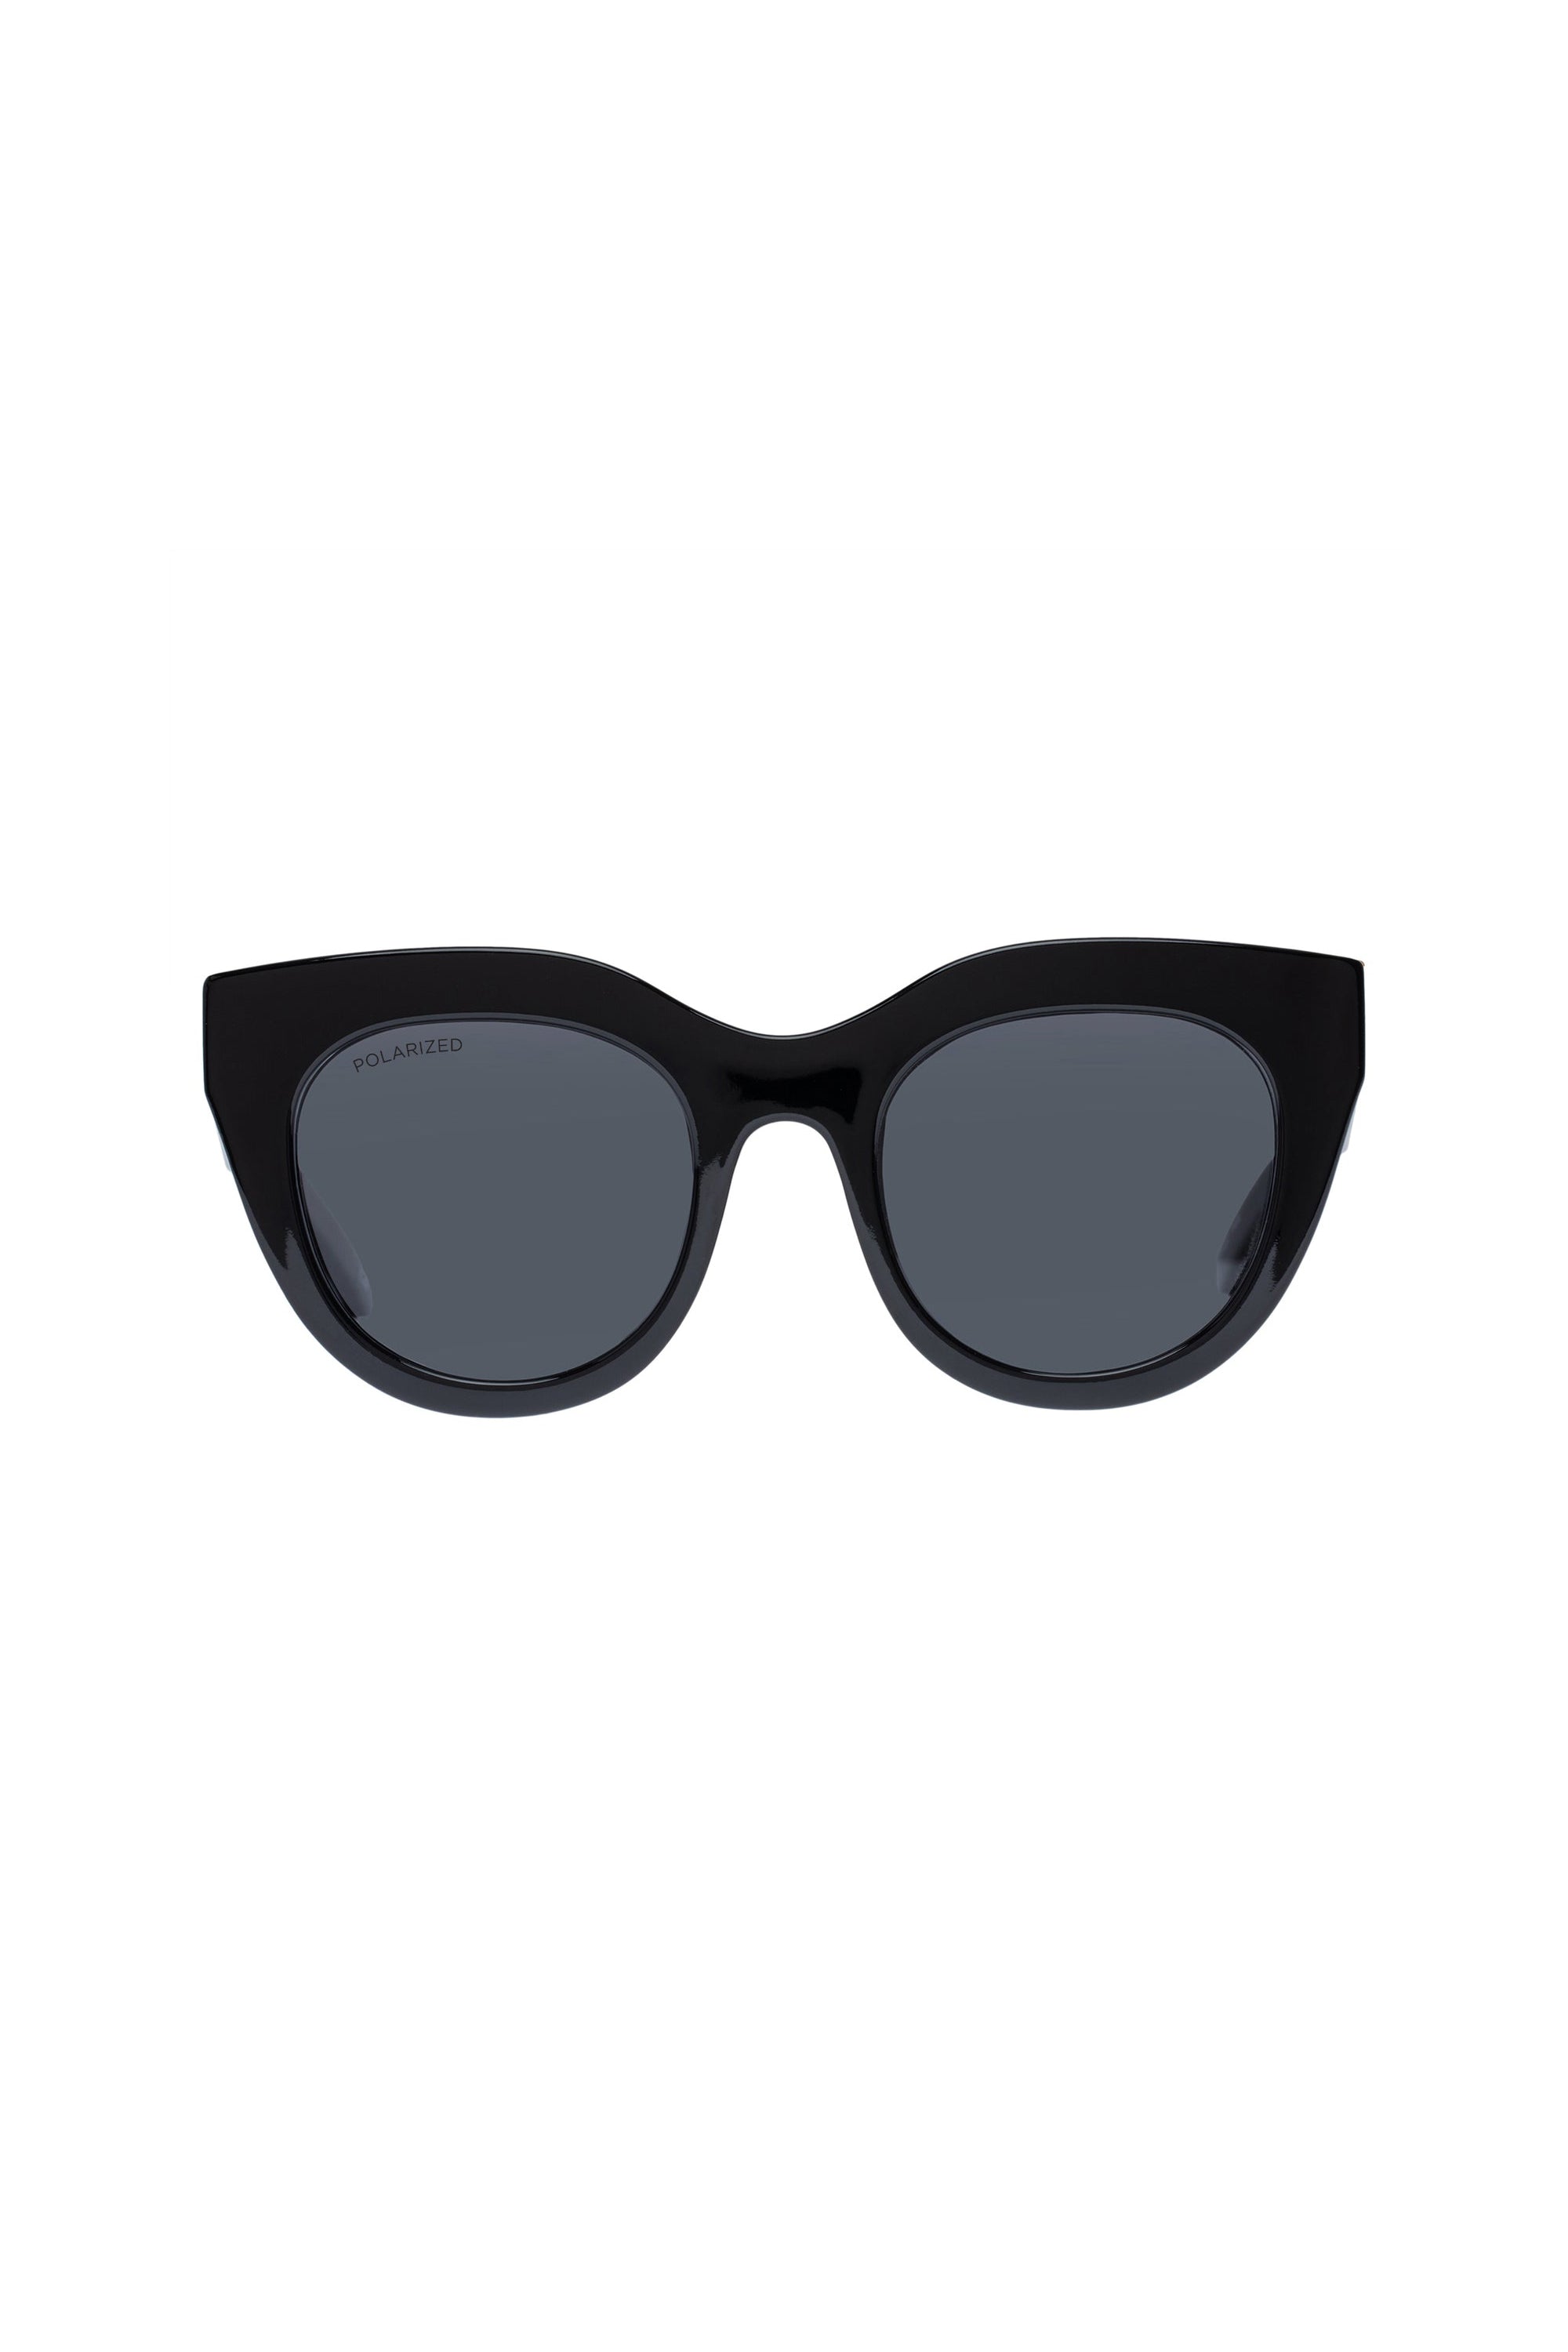 Le Specs Air Heart Sunglasses - Black *Polarized* - RUM Amsterdam